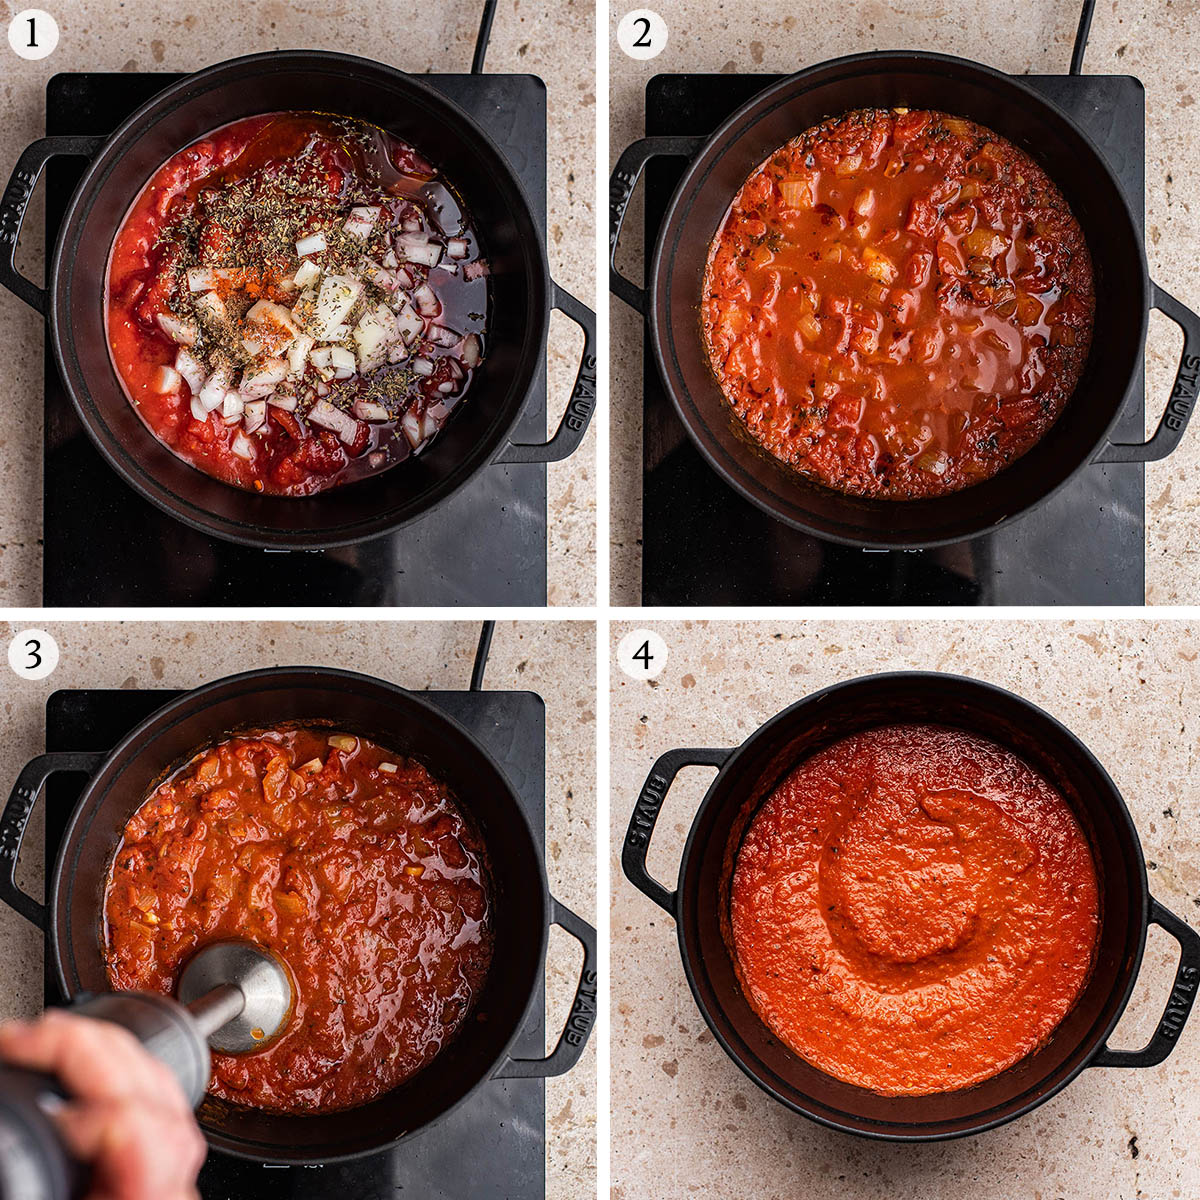 Tomato sauce steps 1 to 4.